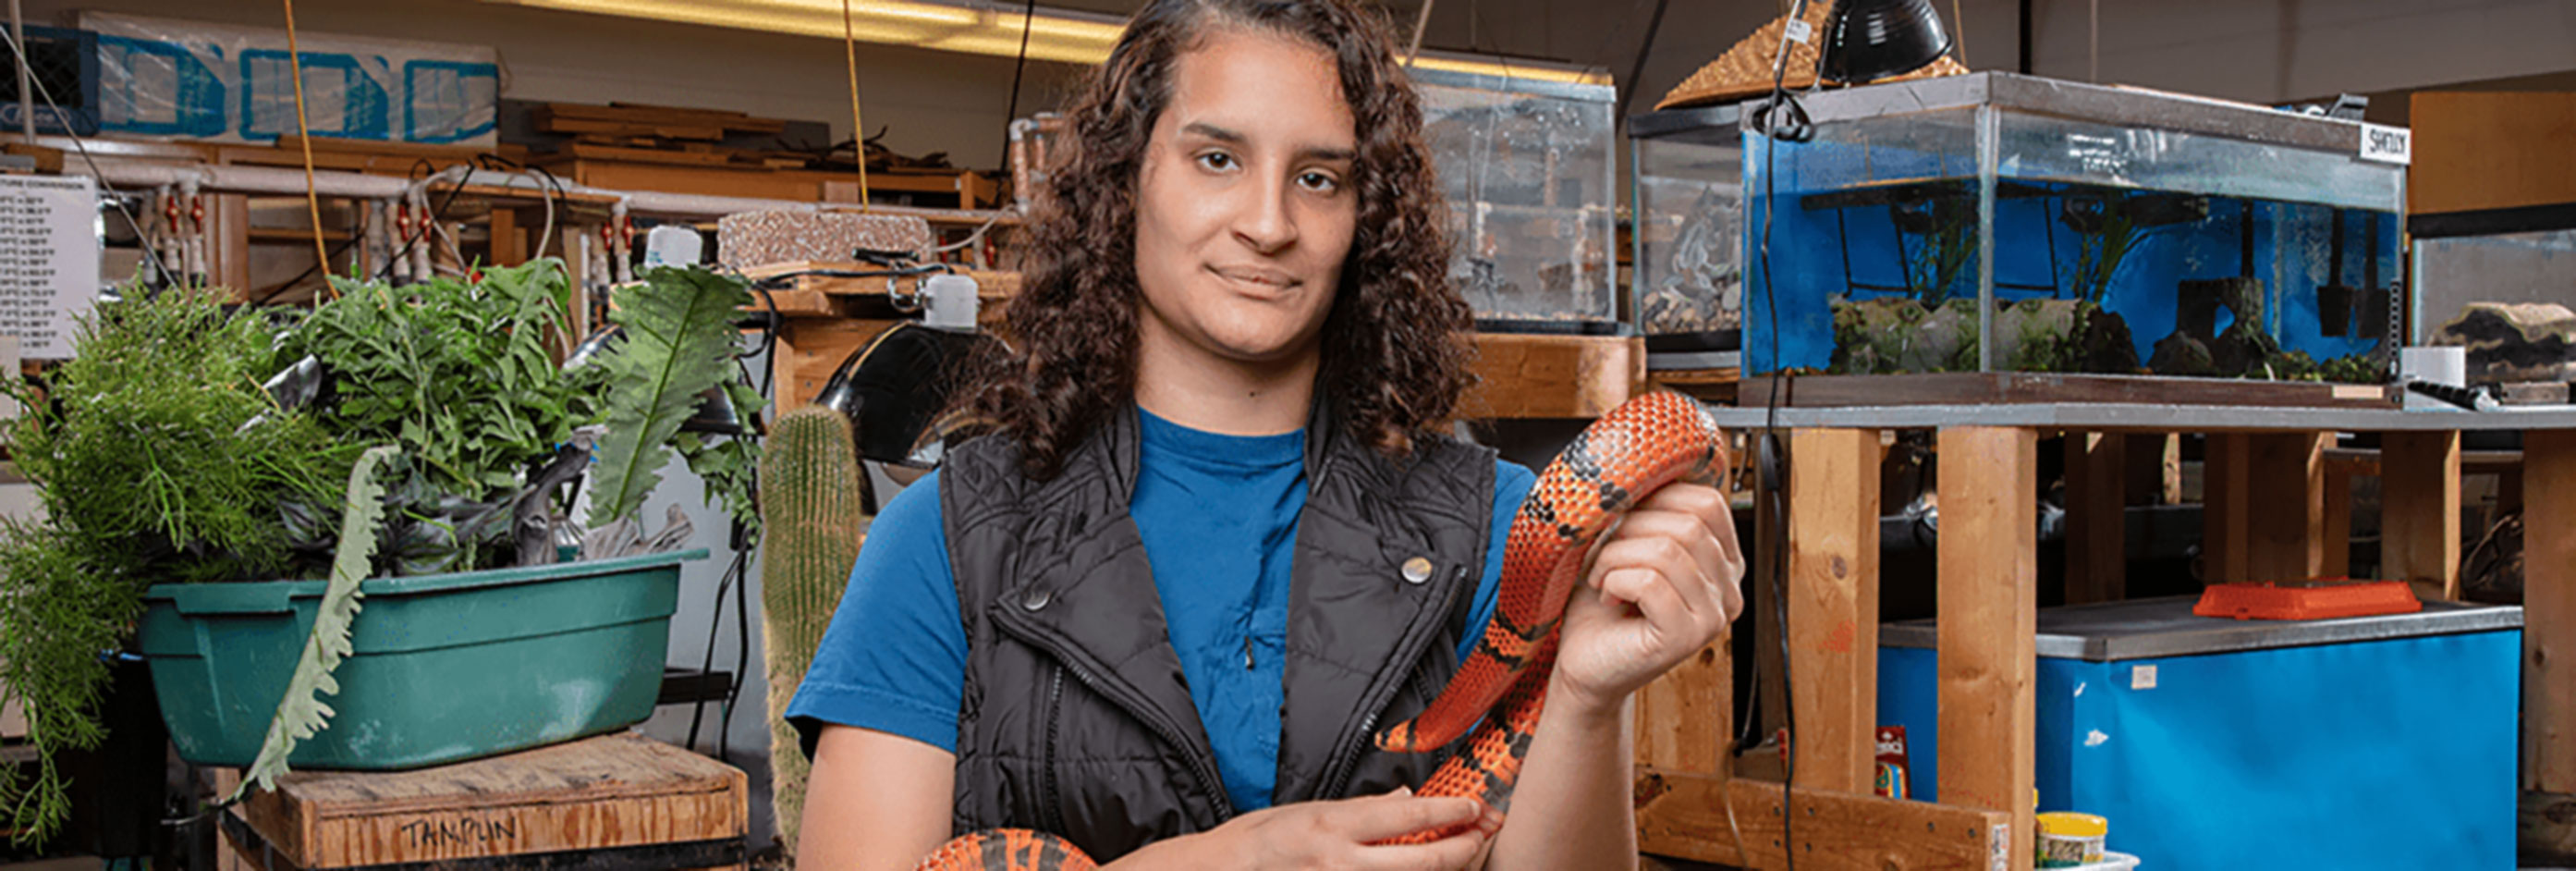 Student holding a snake.